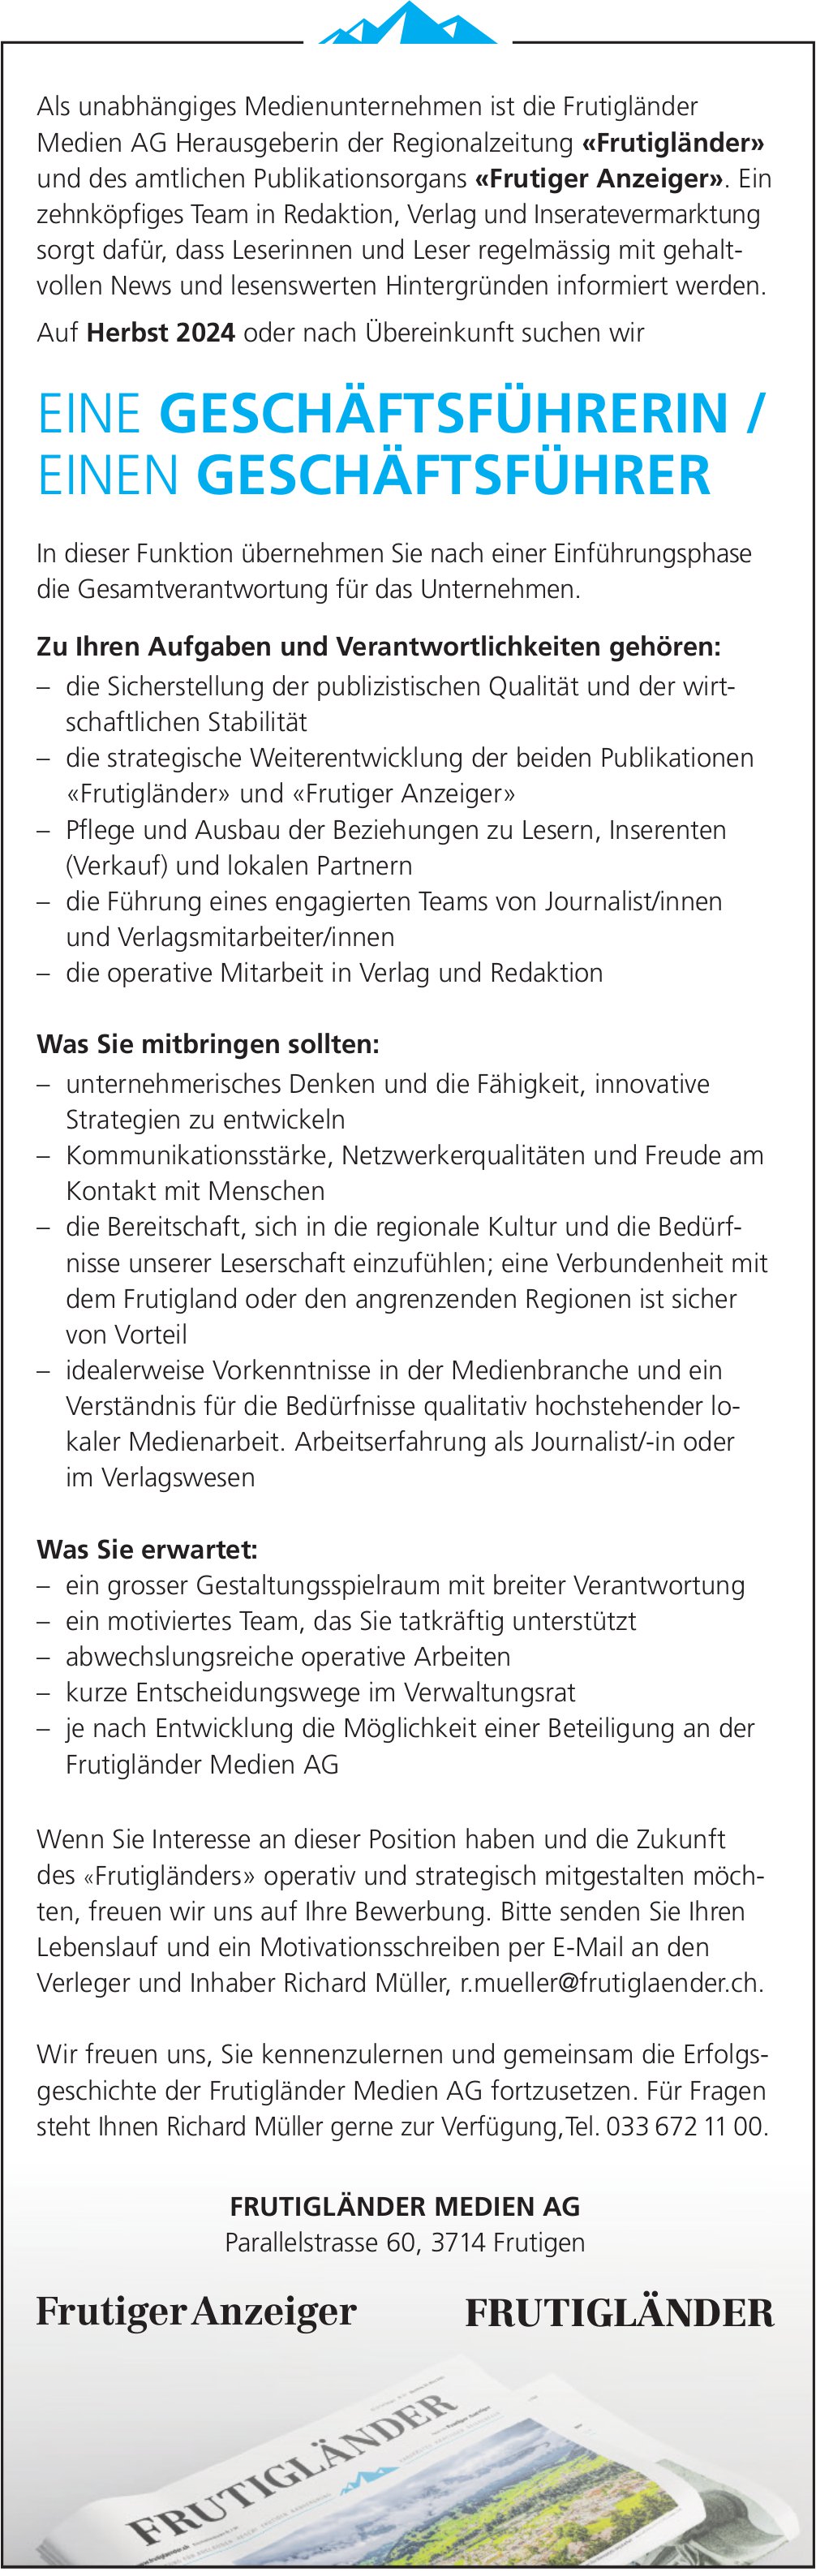 Geschäftsführerin / Geschäftsführer, Frutigländer Medien AG, Frutigen, gesucht